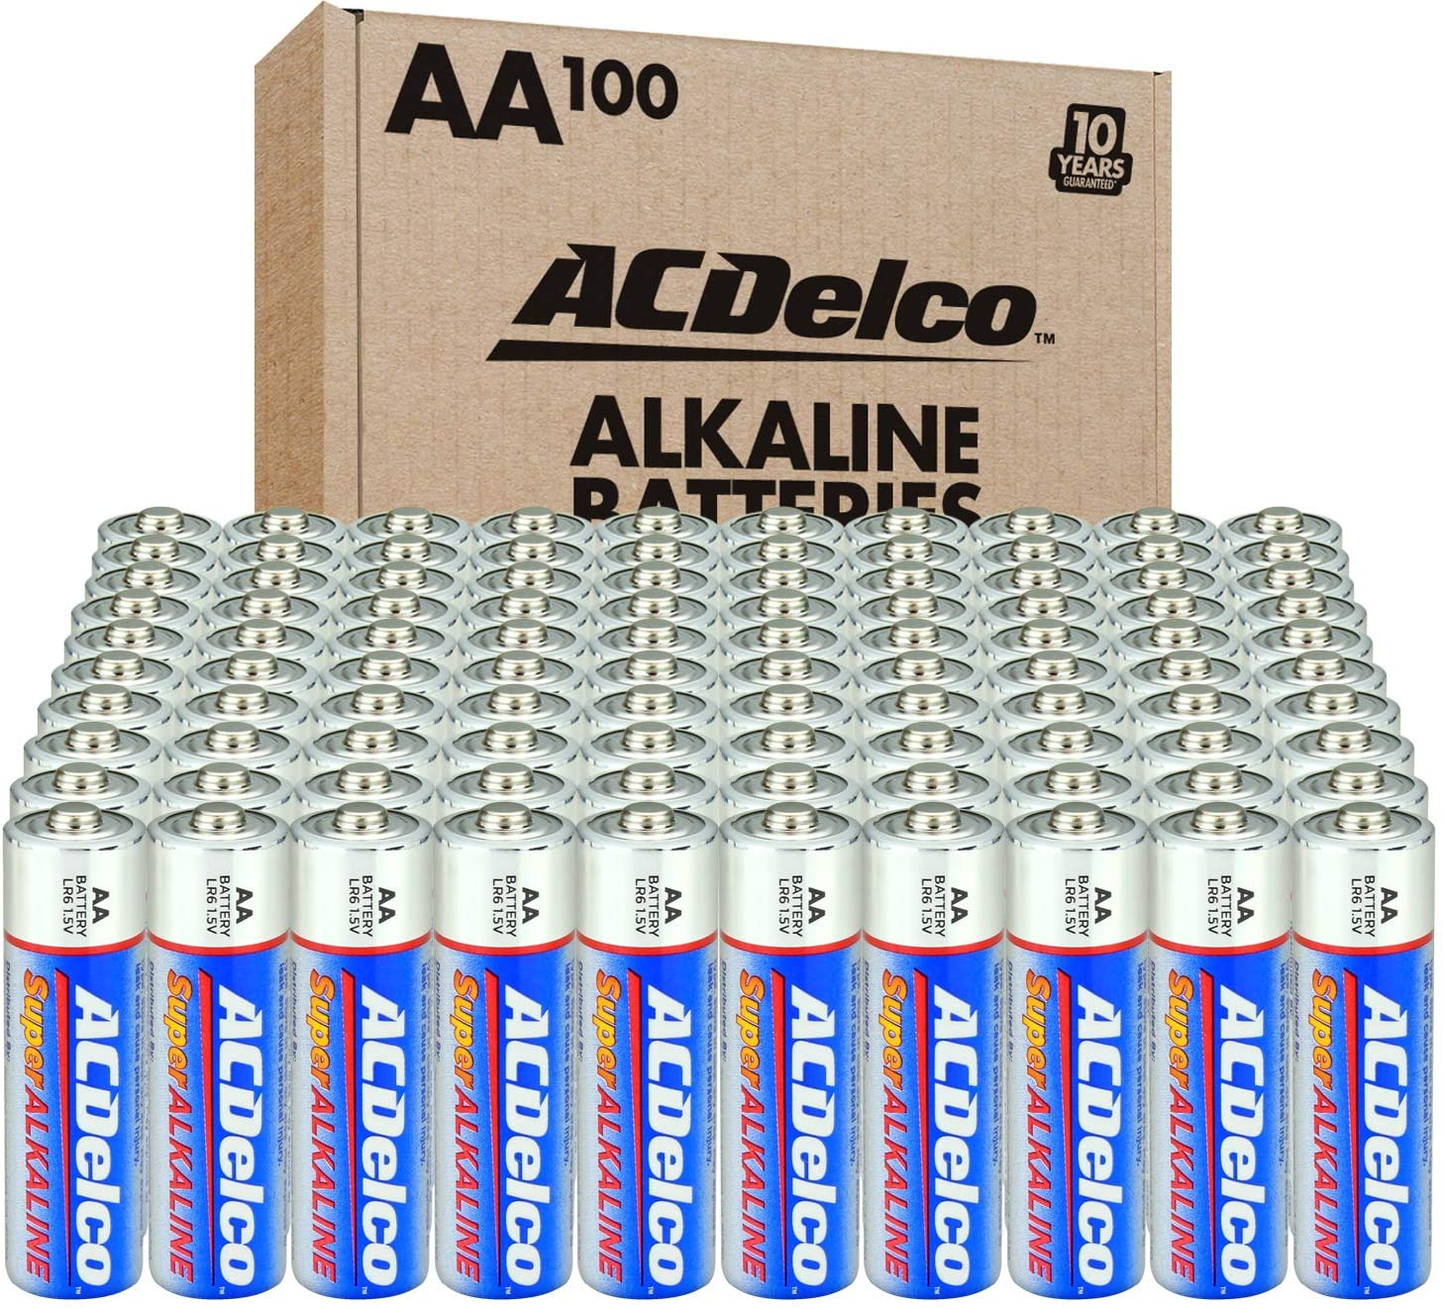 Acdelco  AA Batteries, Maximum Power Super Alkaline Battery, 10-Year Shelf Life, Recloseable Packaging, Blue